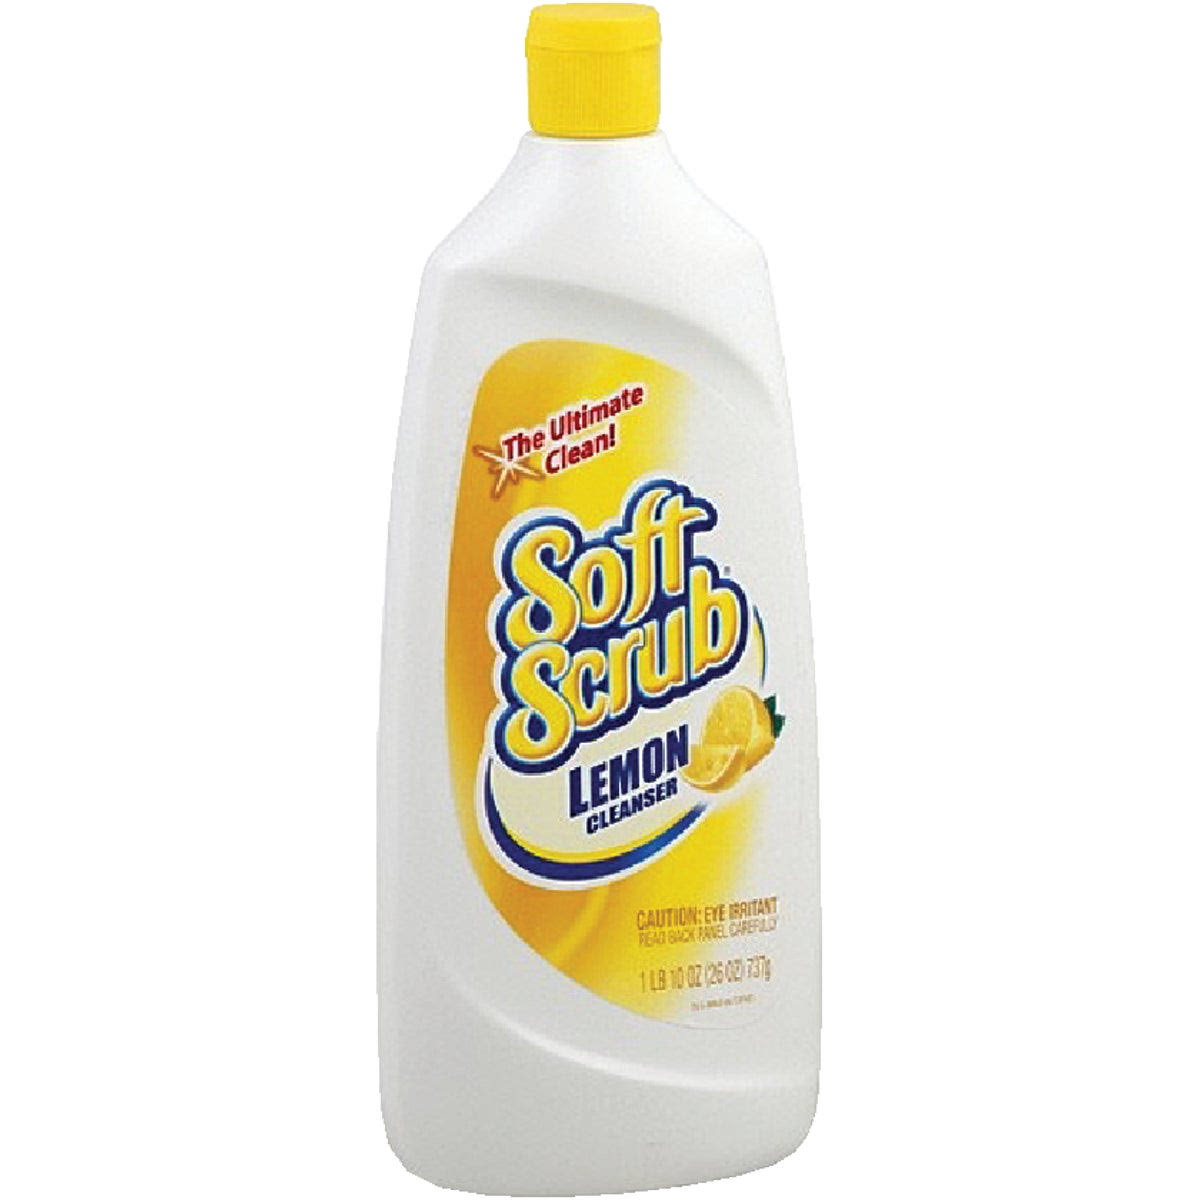 Soft Scrub All Purpose Cleanser - 24oz